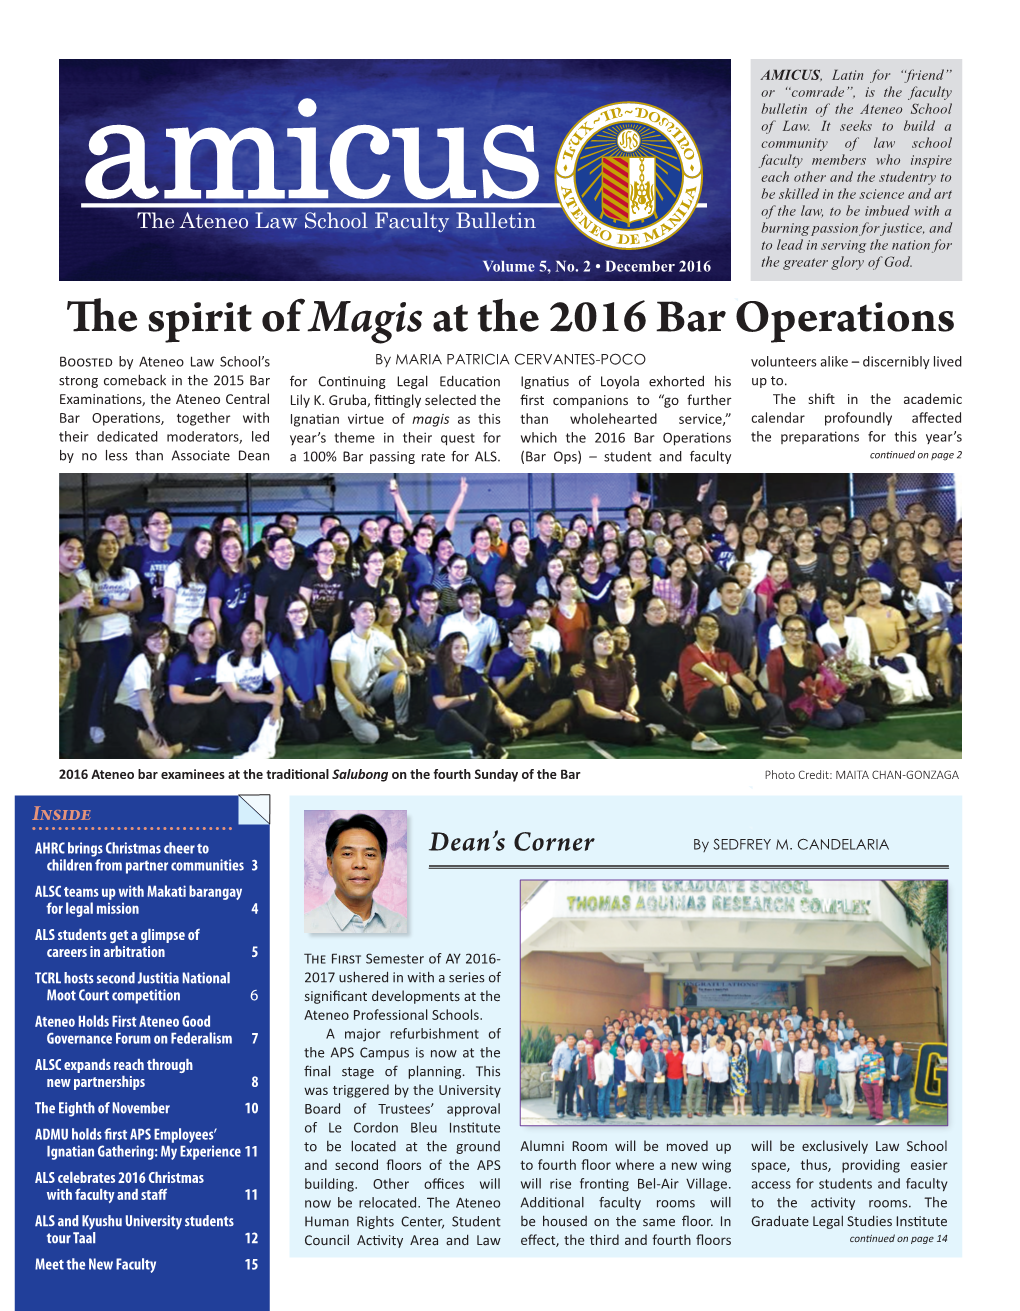 The Spirit of Magisat the 2016 Bar Operations